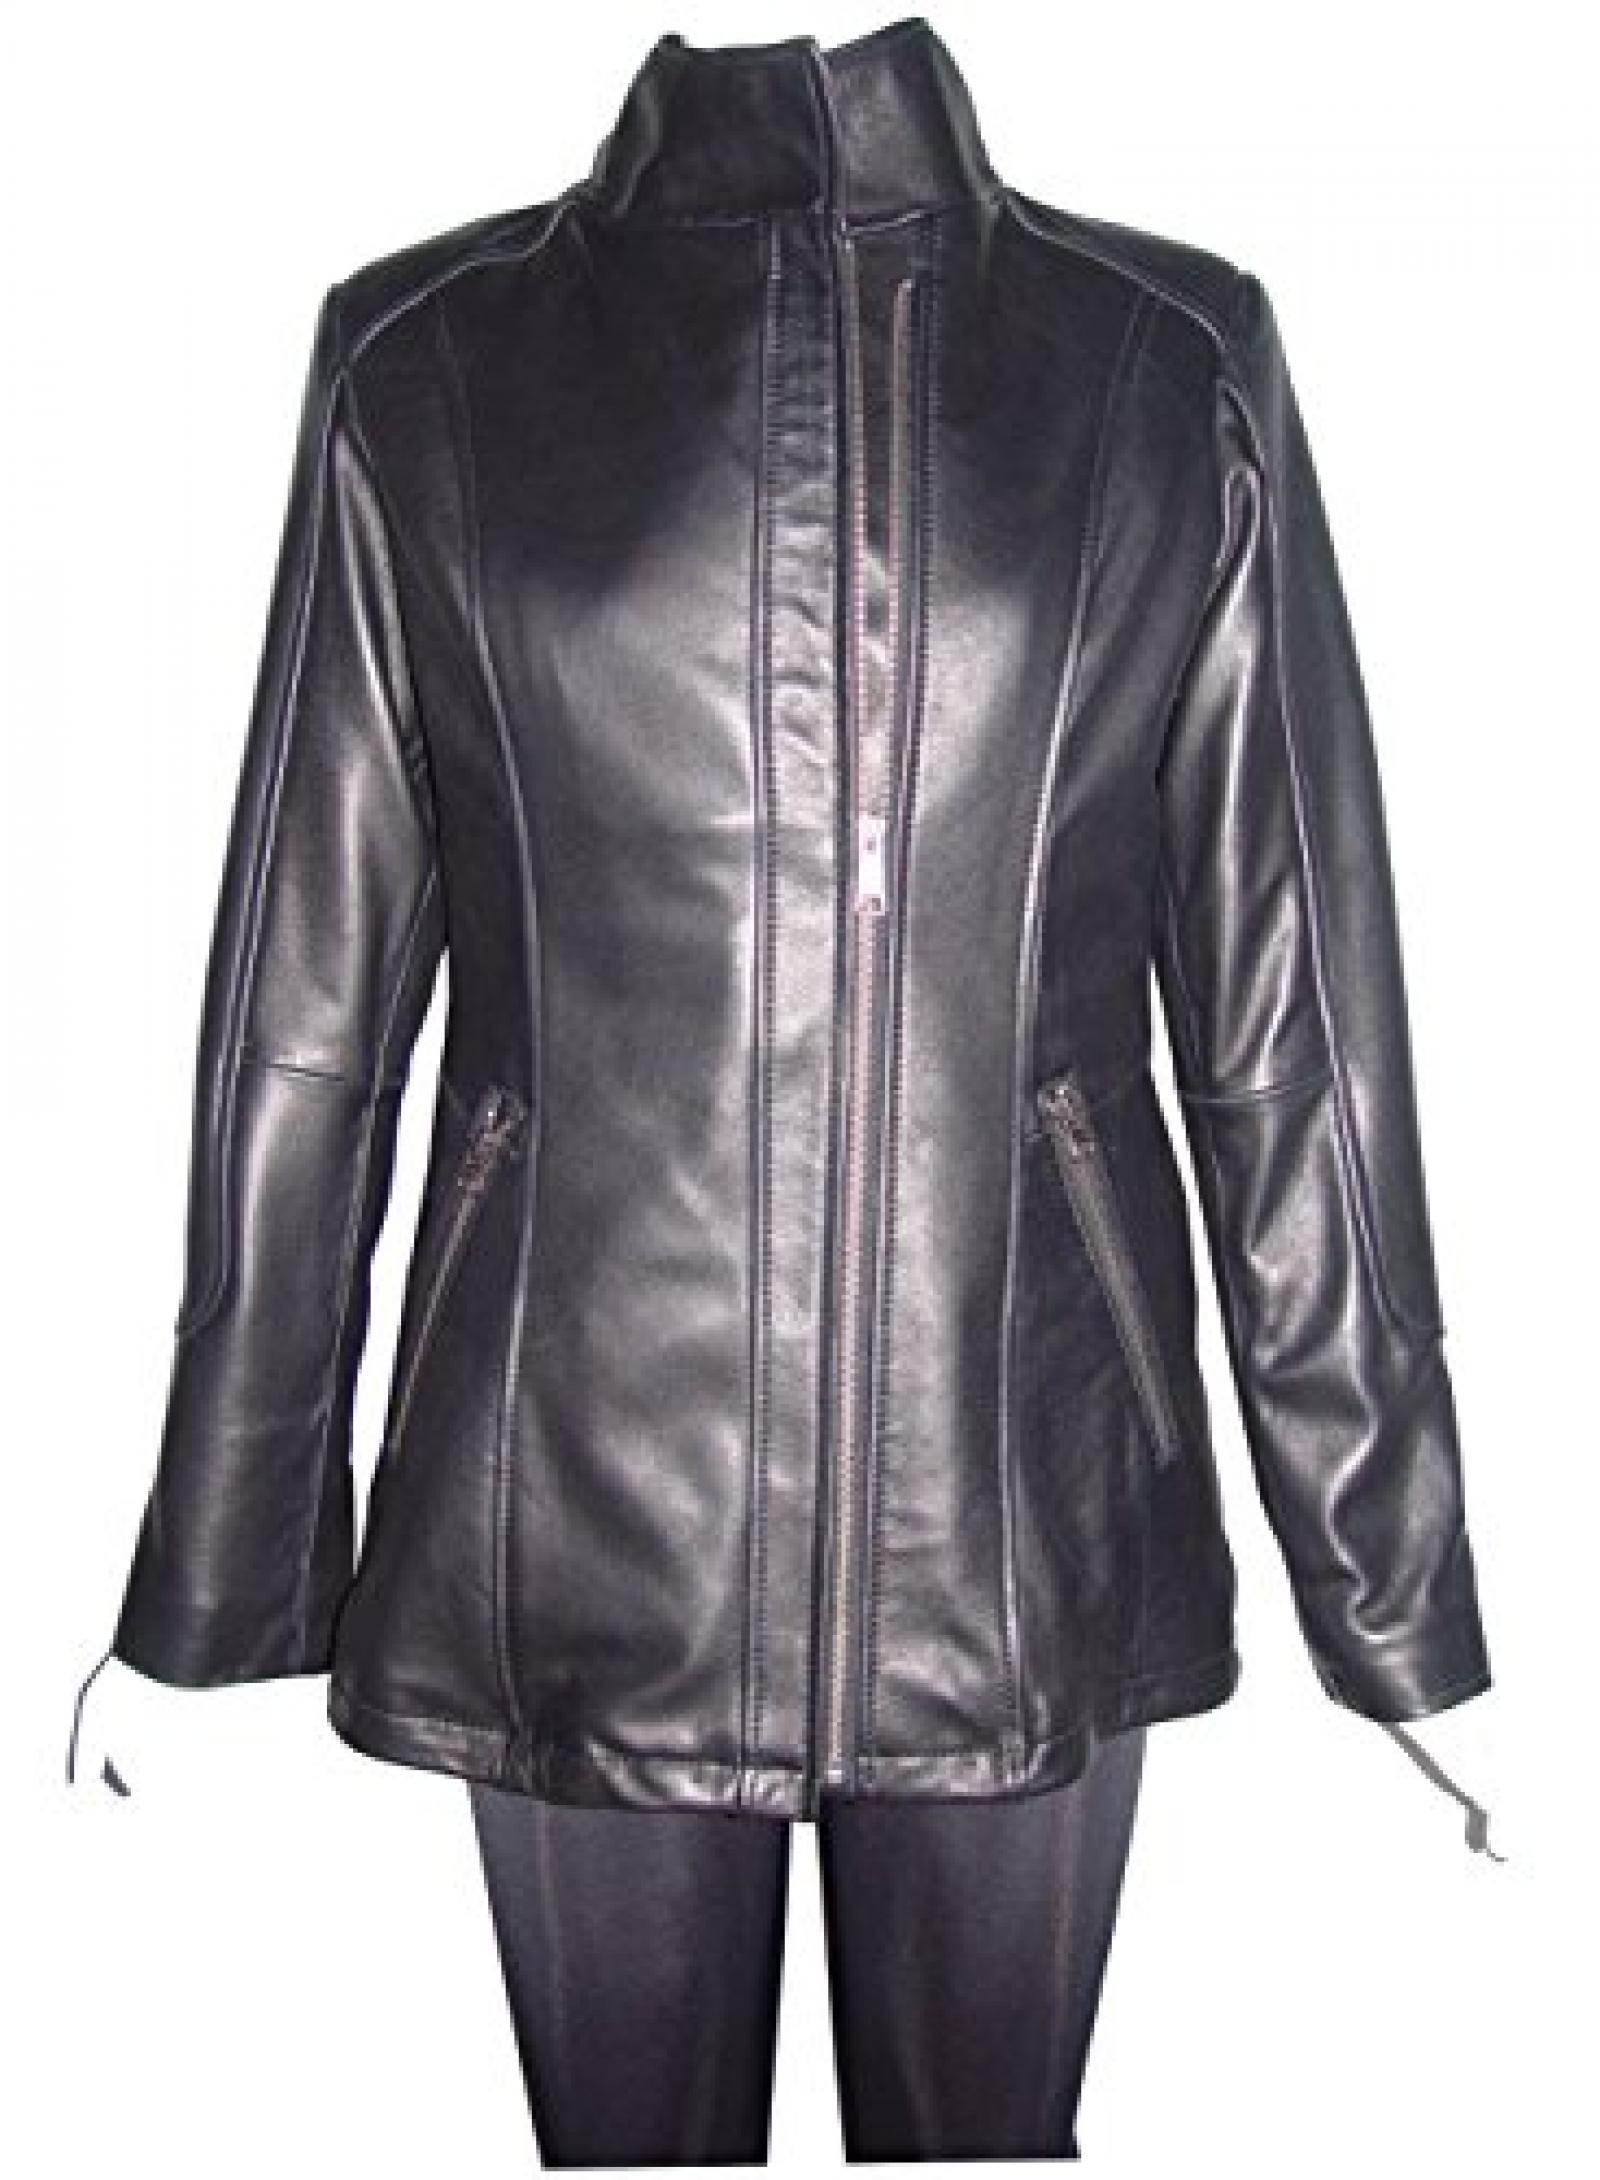 Nettailor Women PLUS SIZE 4197 Soft Leather Casual Moto Jacket Zip Front 